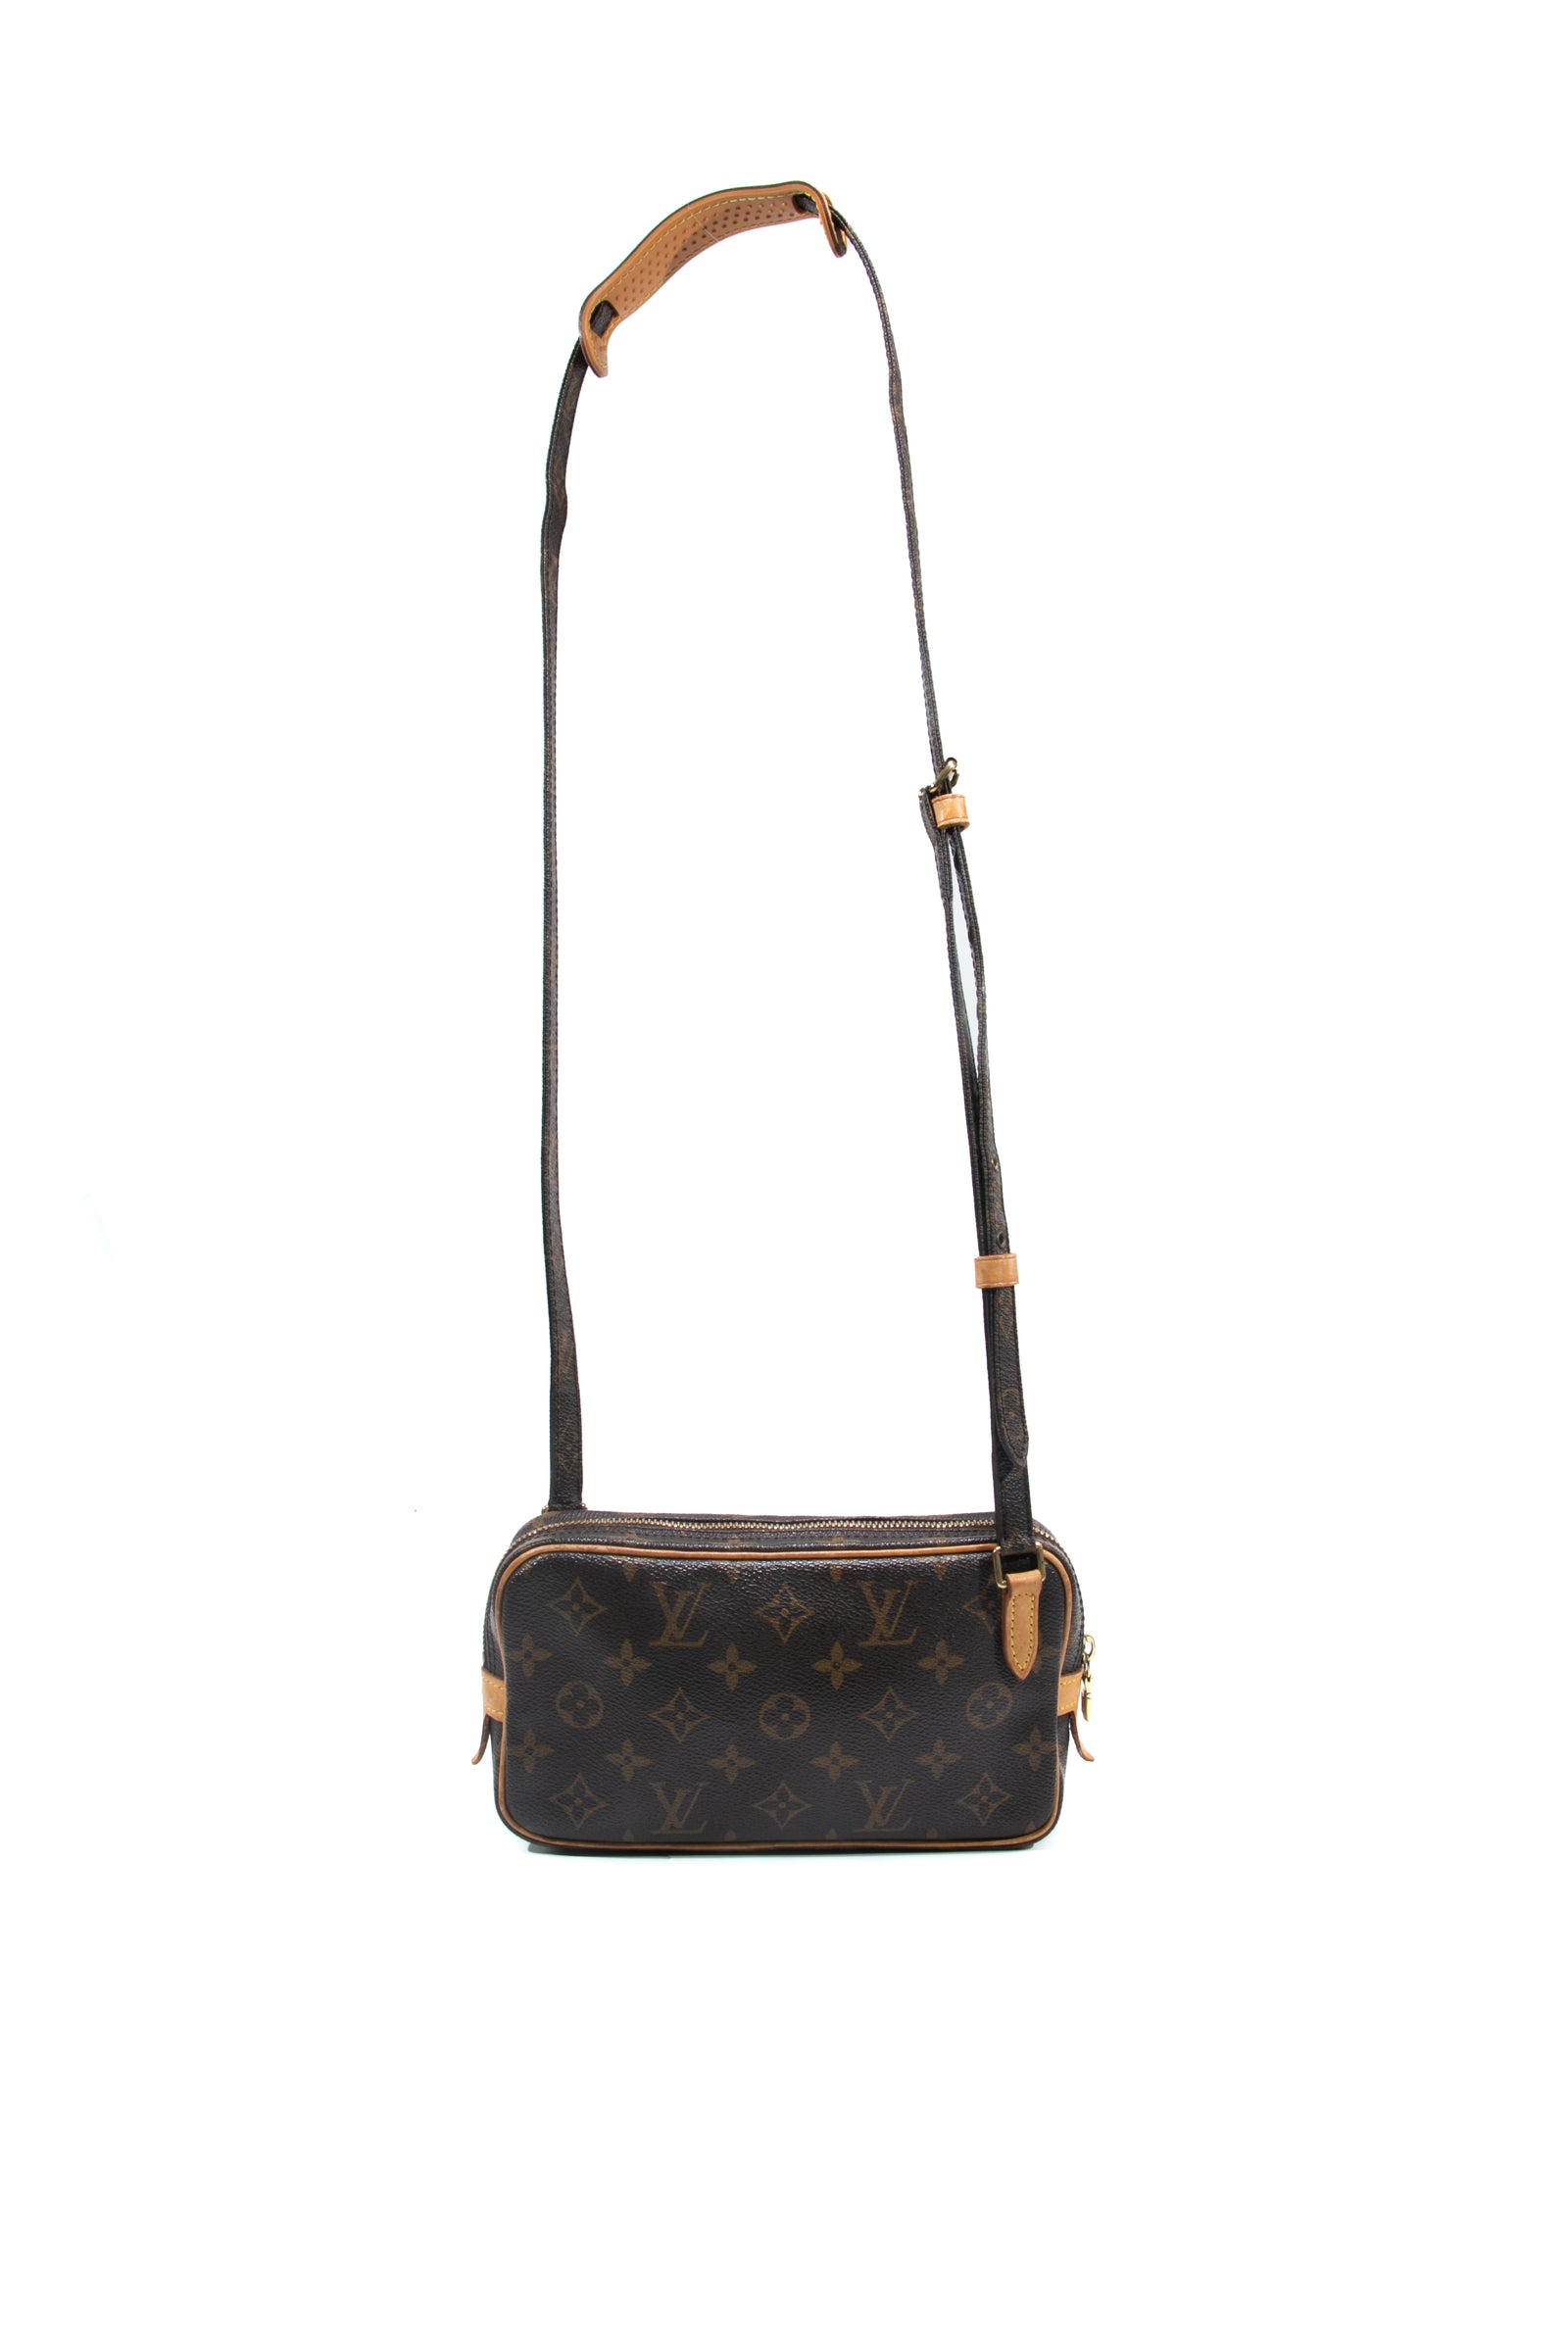 Louis Vuitton Bags - Buy next Louis Vuitton Bag at Collector's Collectors cage